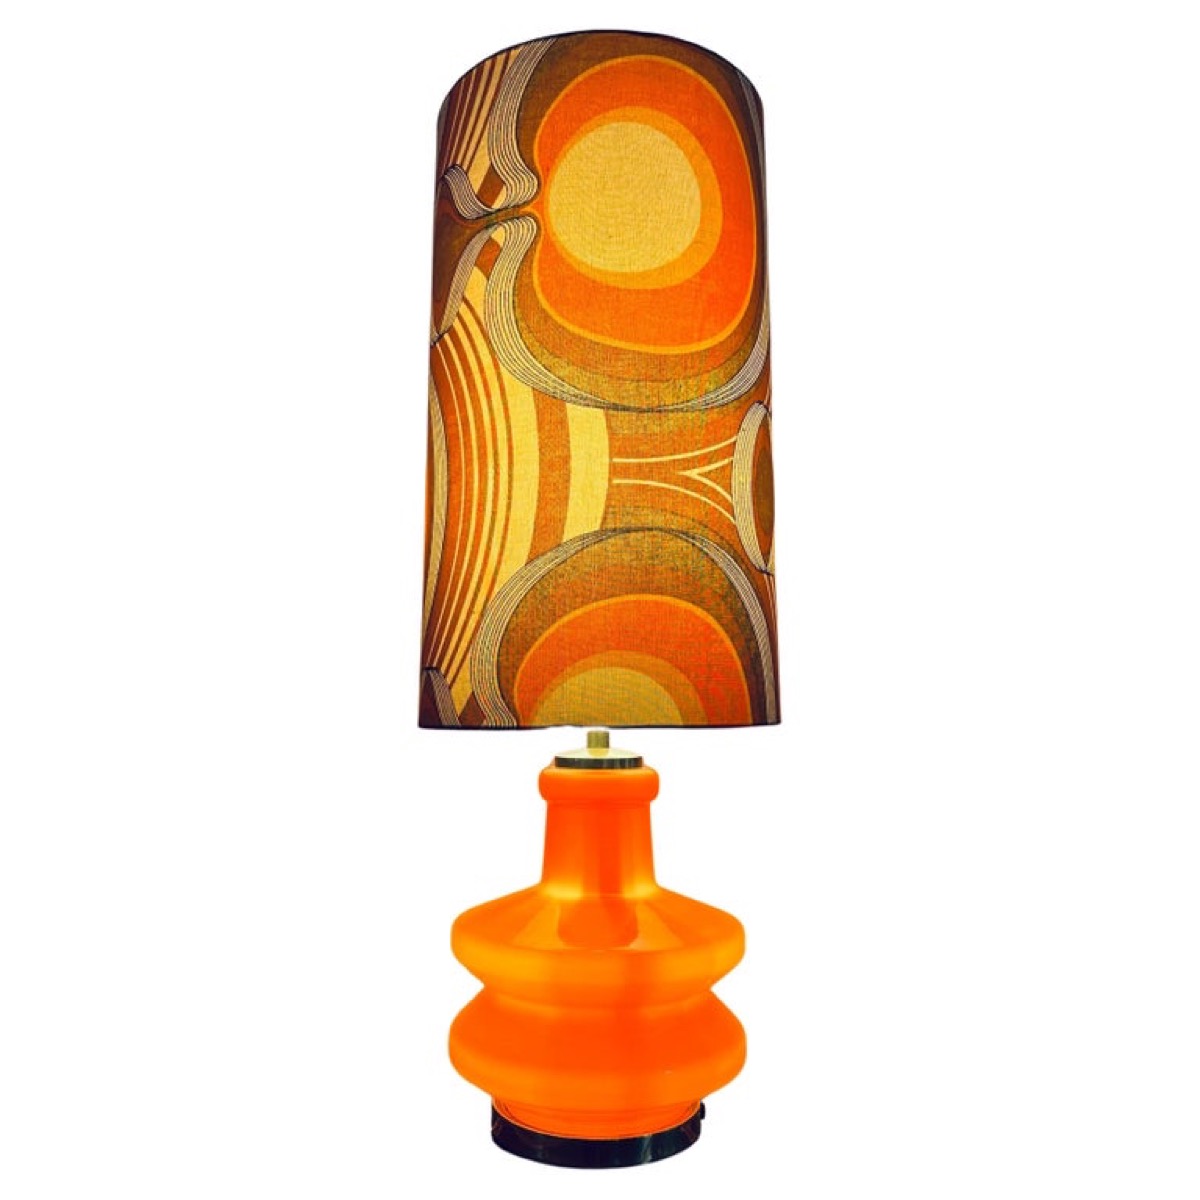 1970s German Space-Age Illuminated Orange Glass Table Lamp inc Original Shade